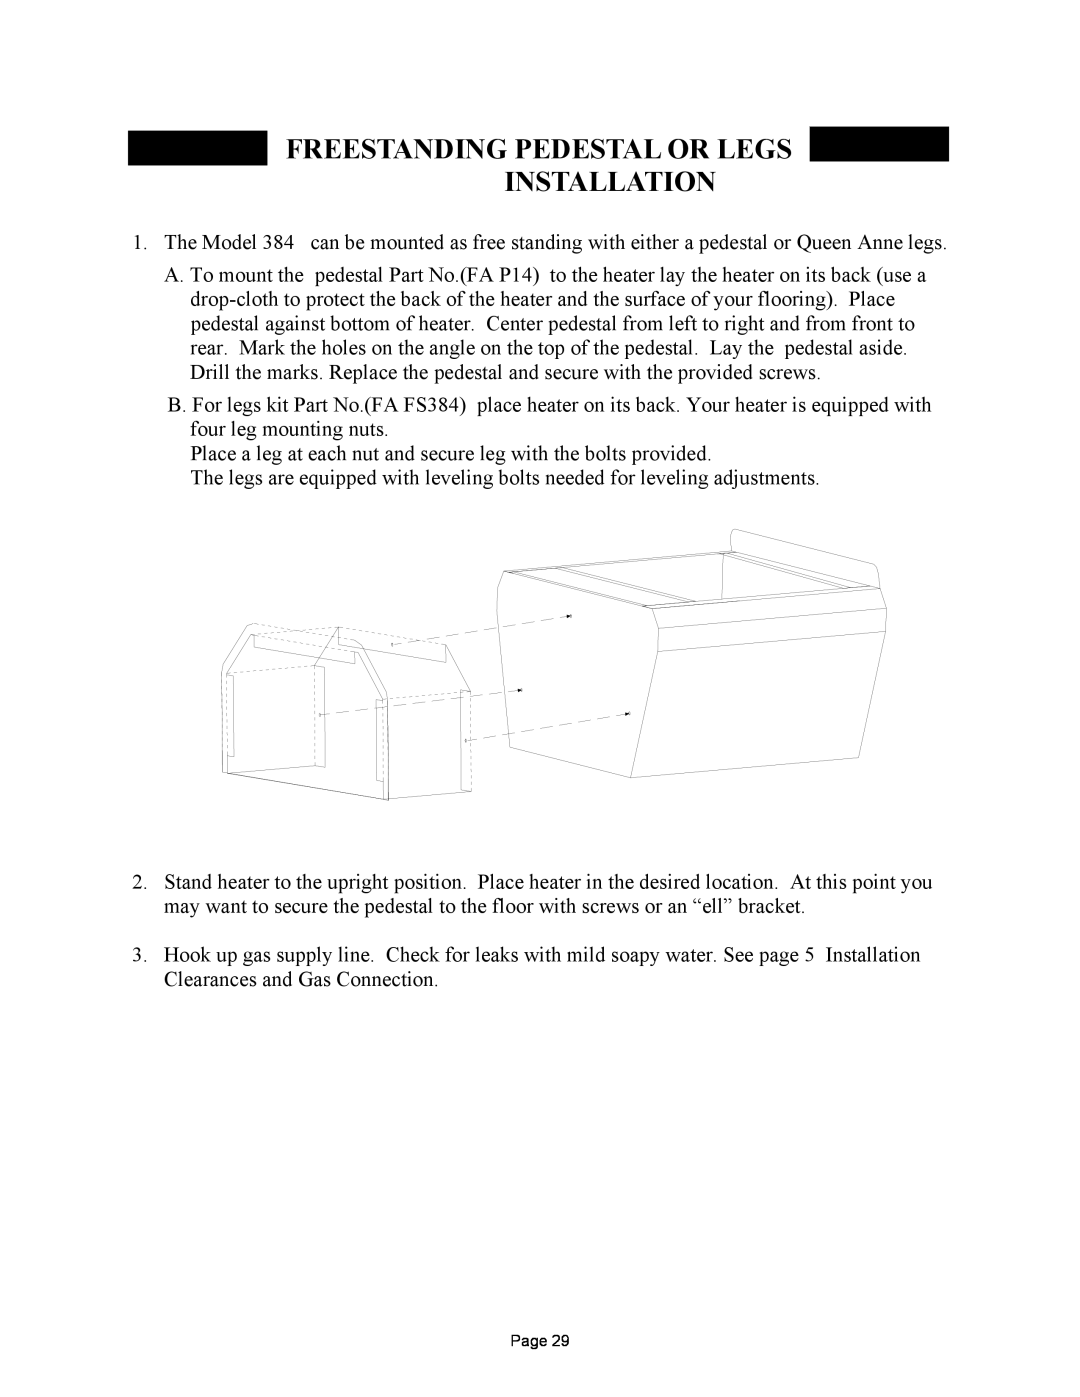 New Buck Corporation 384 manual Freestanding Pedestal Or Legs Installation 